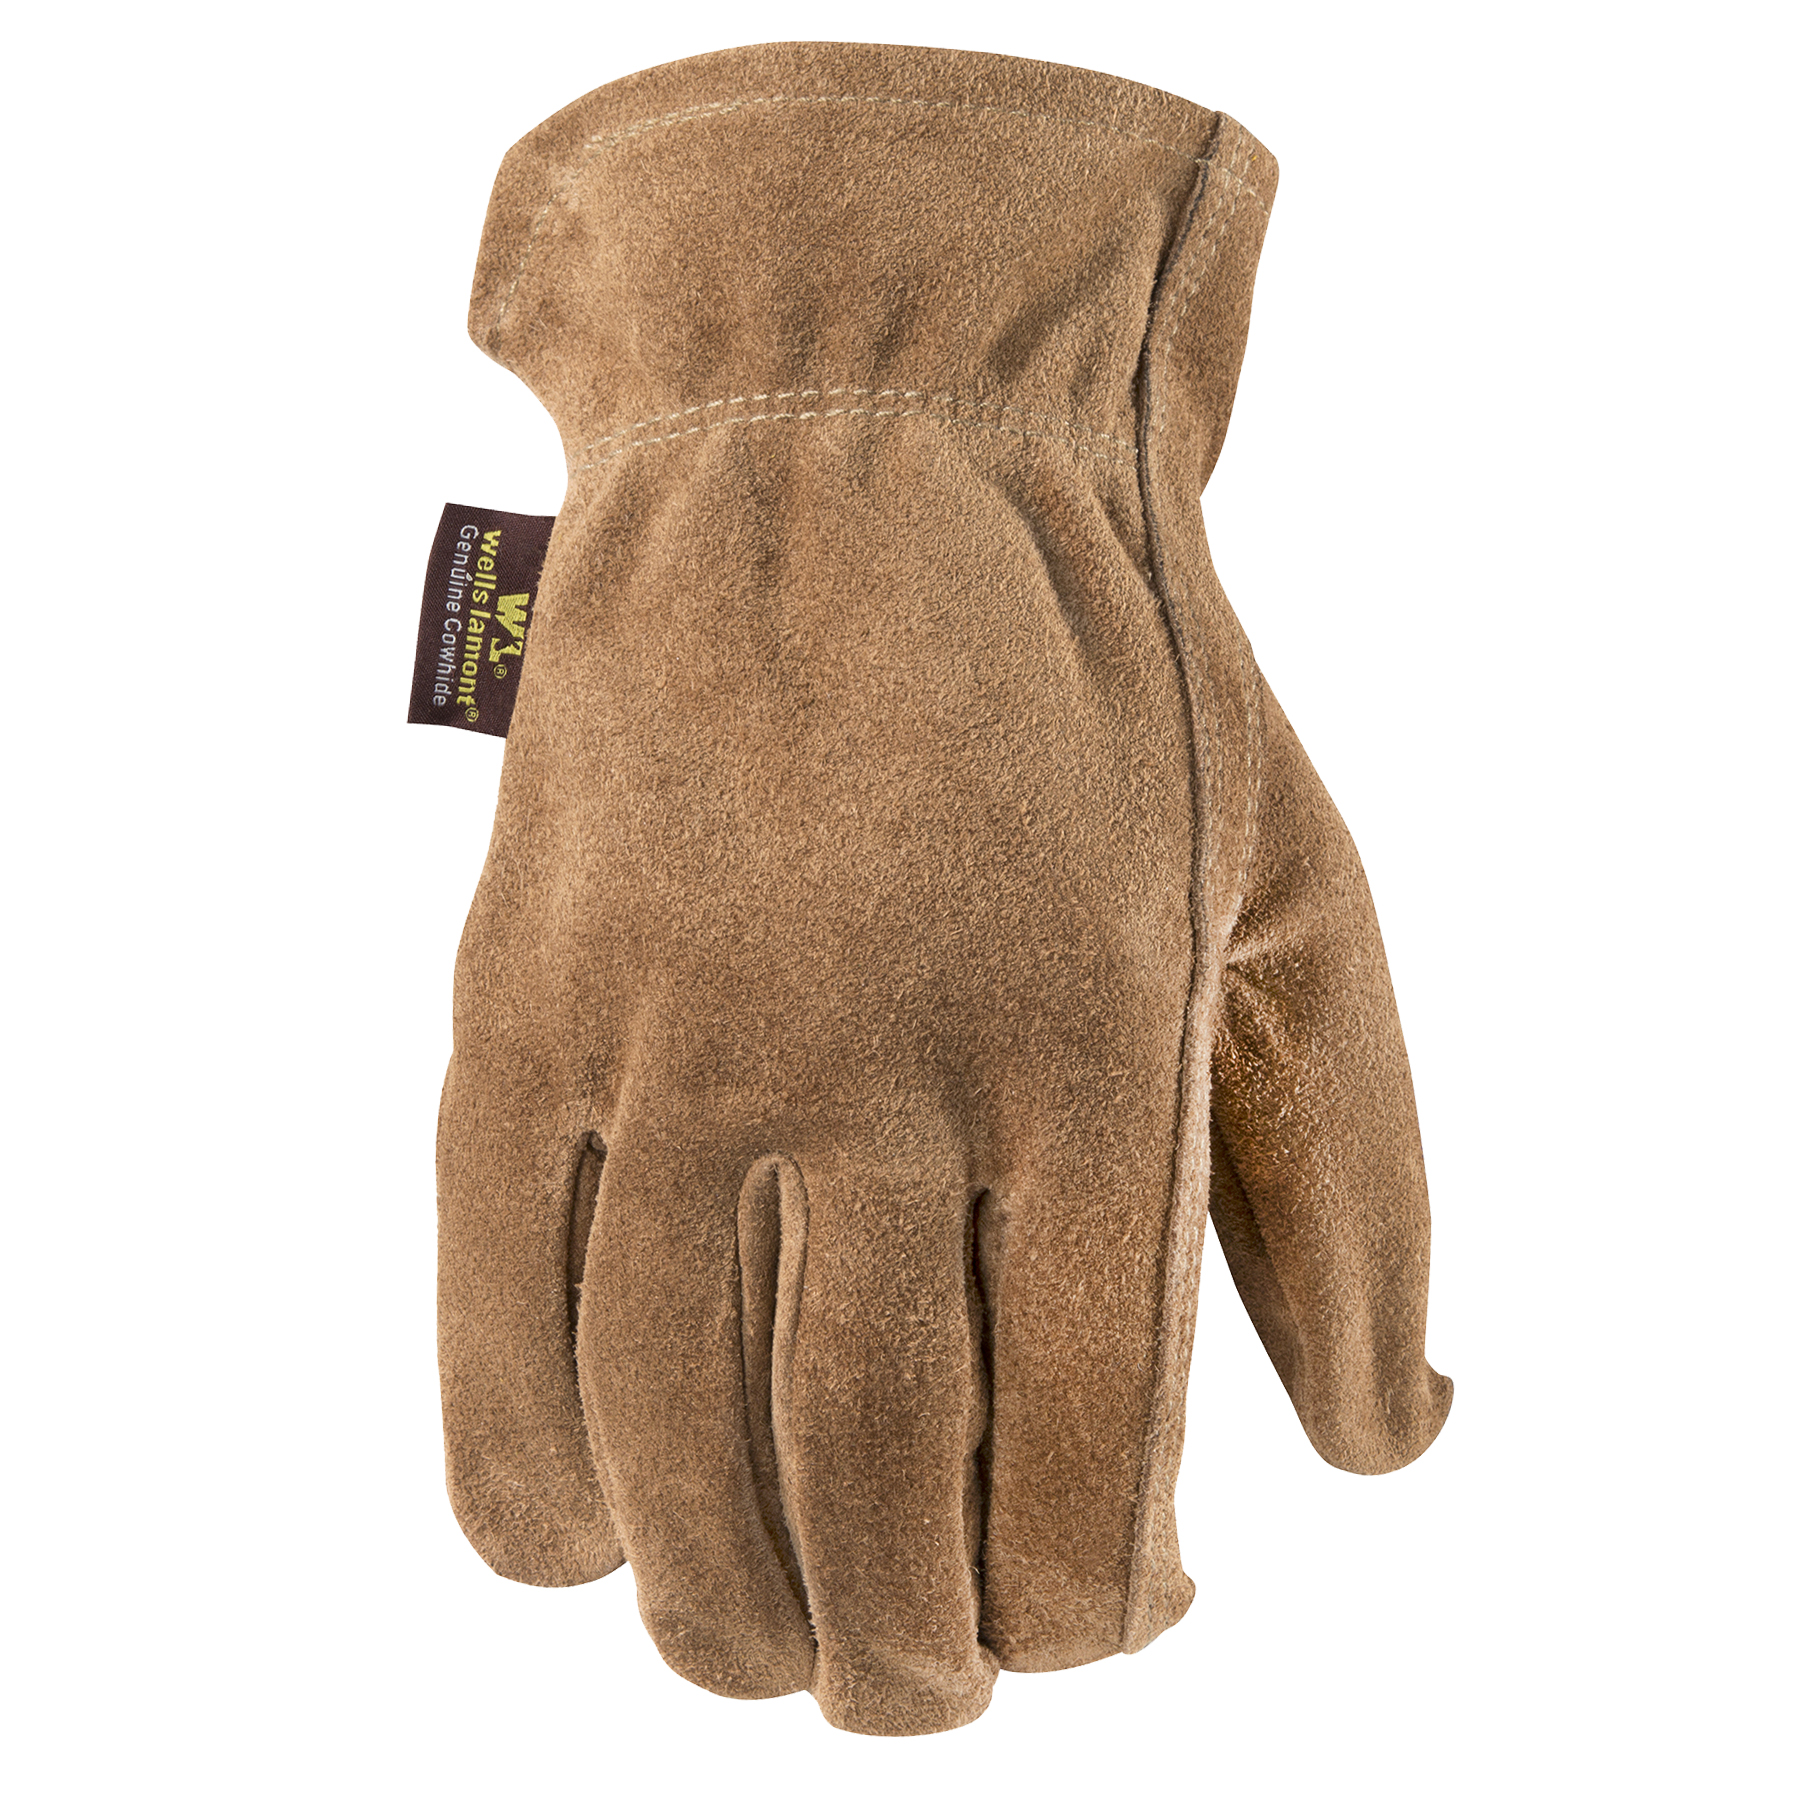 1012XL Work Gloves, Men's, XL, Keystone Thumb, Cowhide Leather, Brown/Tan